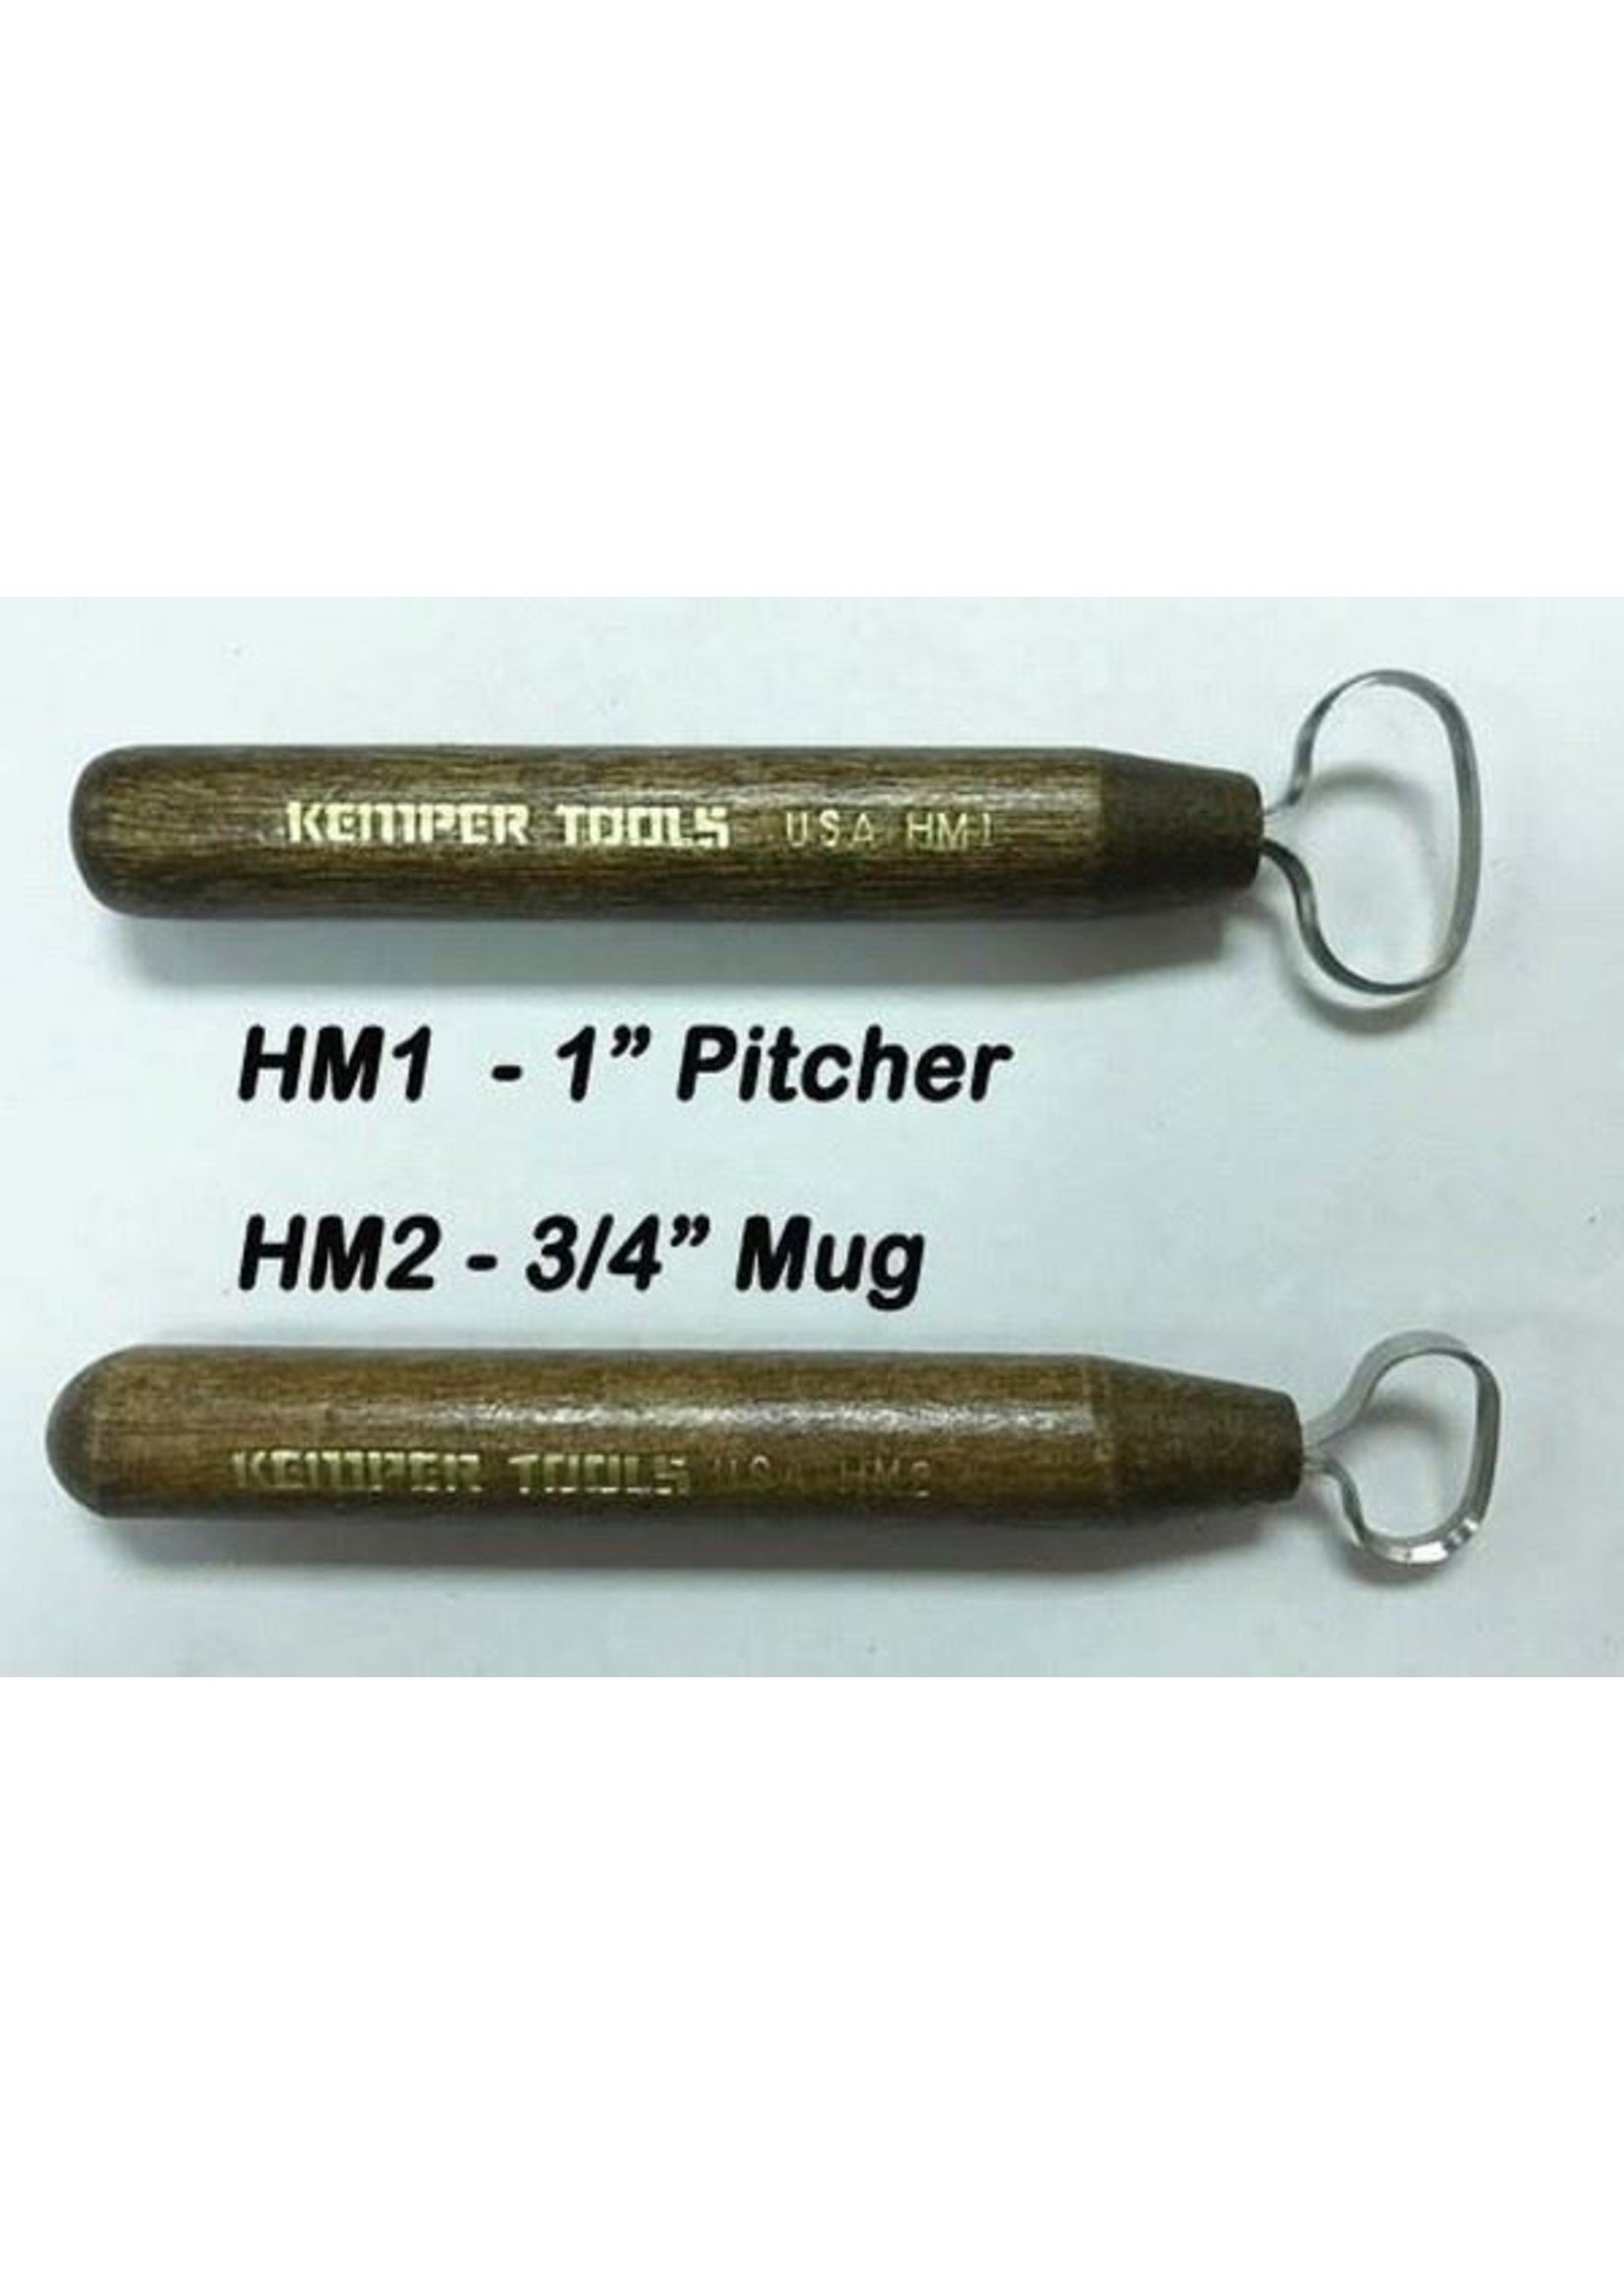 Kemper Tools HANDLE MAKER FOR PITCHER HM1